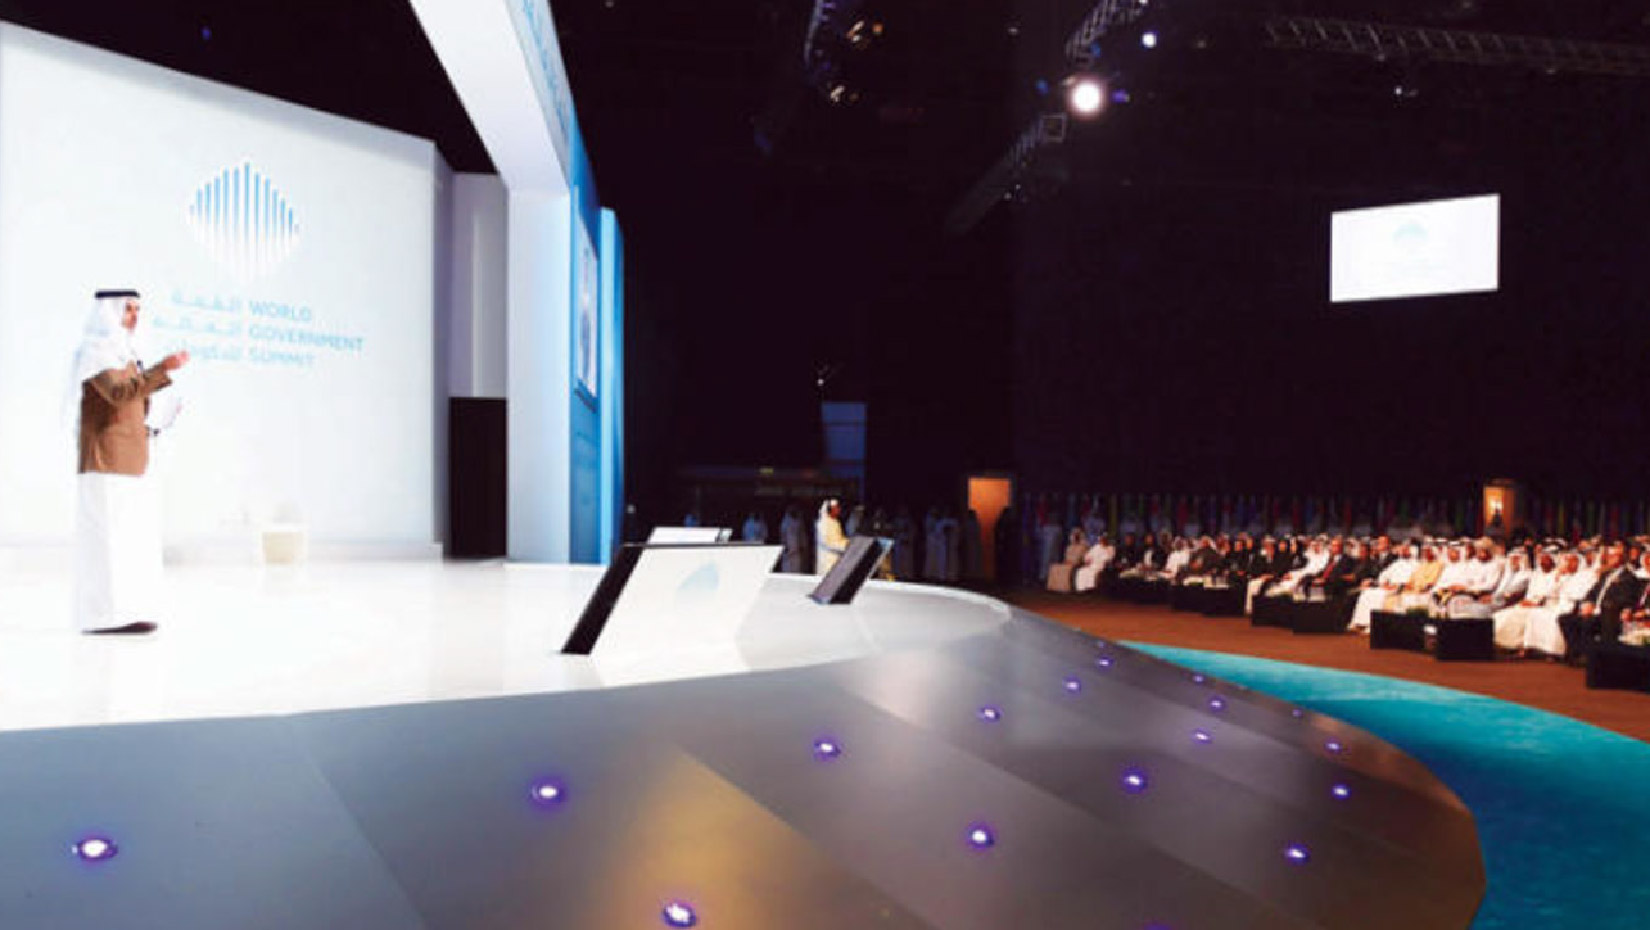 Saif bin Zayed launches the platform "Zayed The Inspirer"